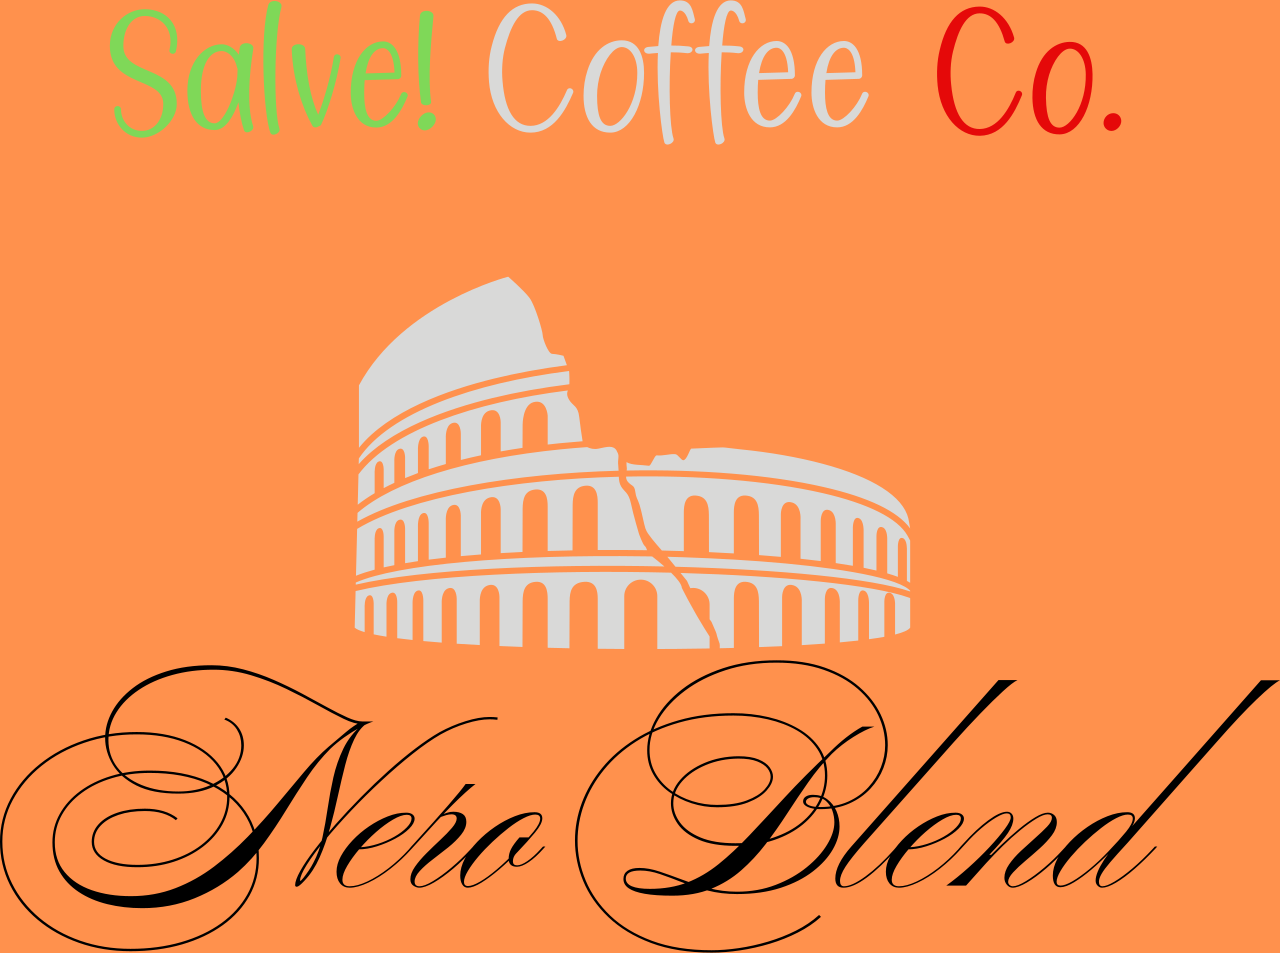 Salve! Coffee co's logo